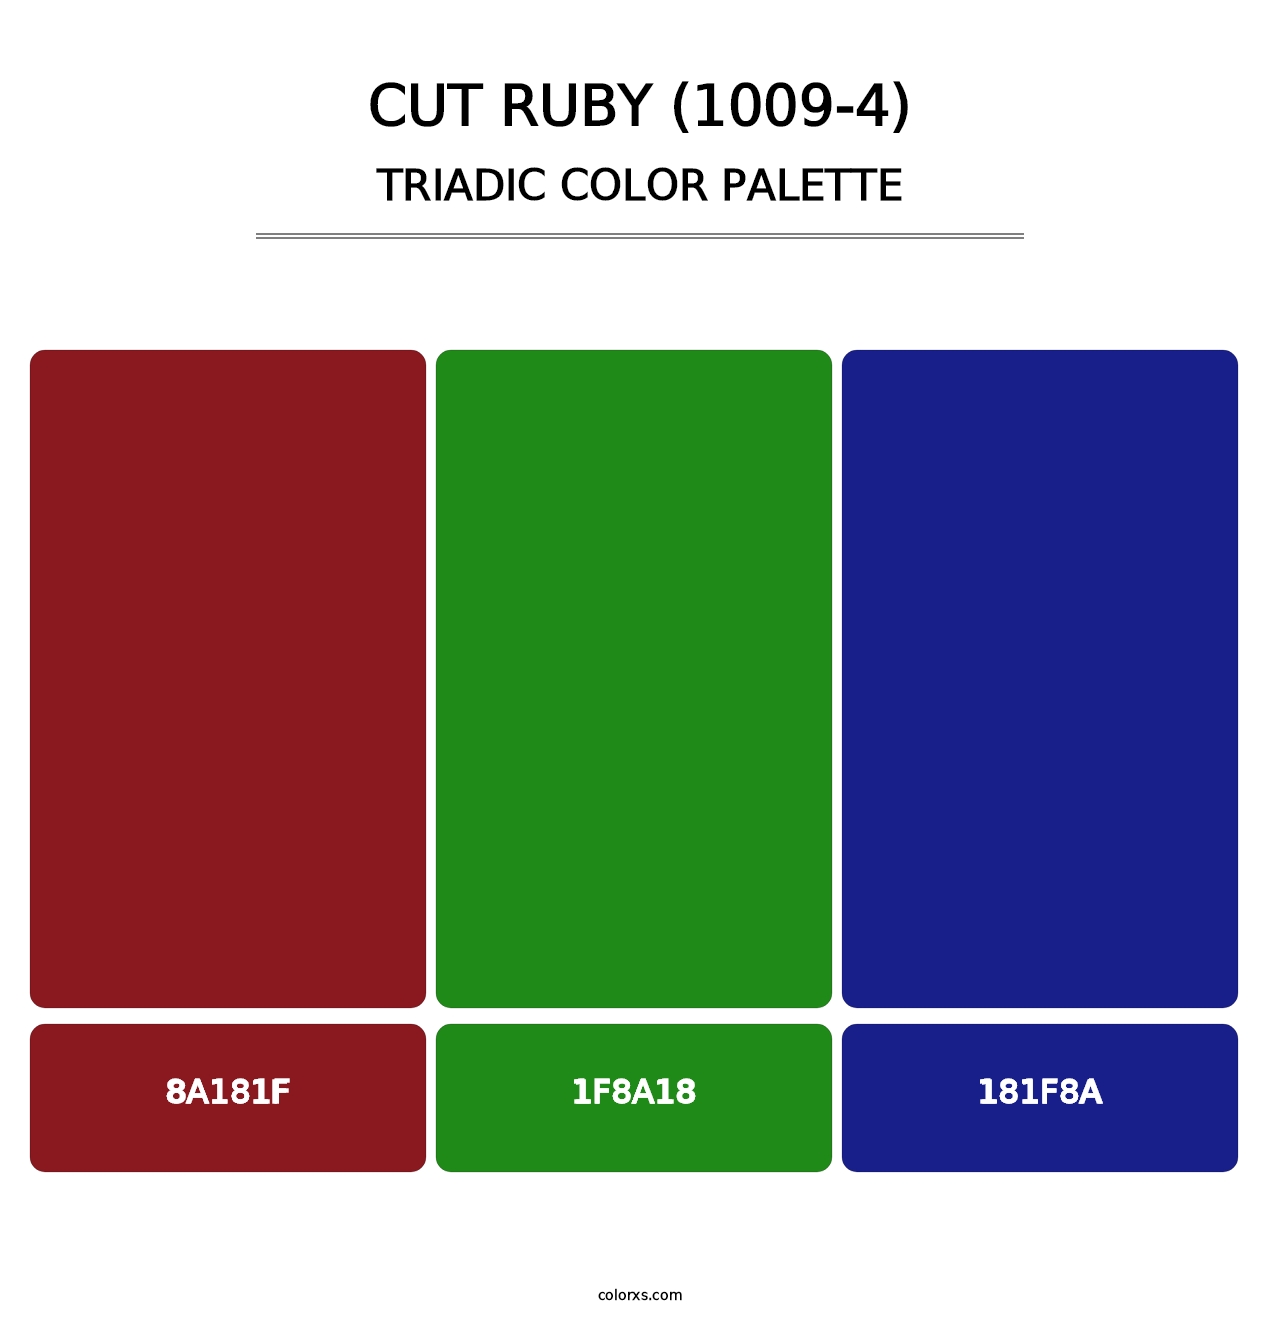 Cut Ruby (1009-4) - Triadic Color Palette